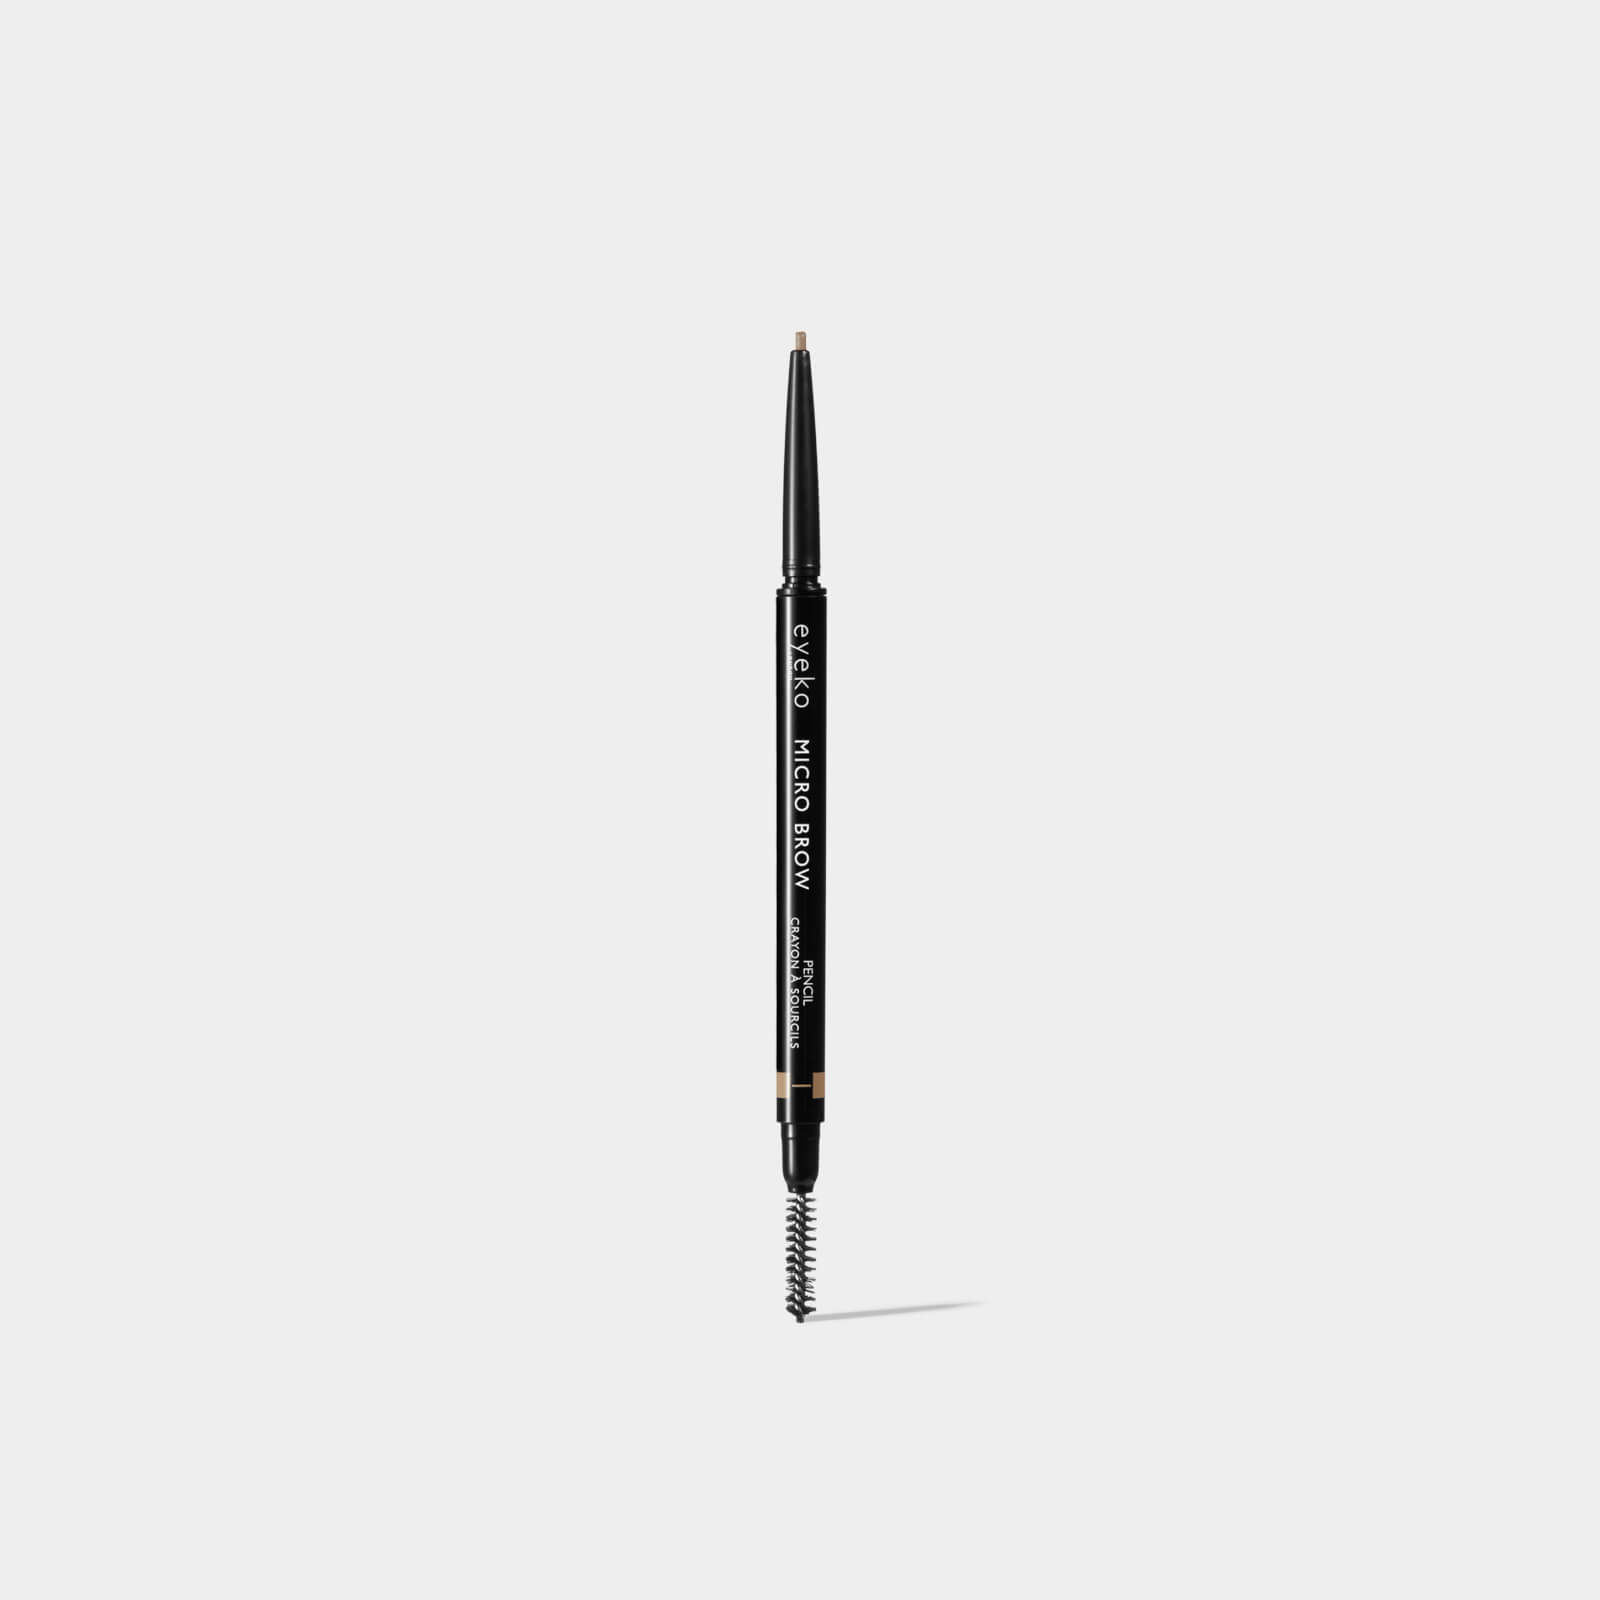 Image of Eyeko Micro Brow Precision Pencil 2g (Various Shades) - 1 - Ash Blonde